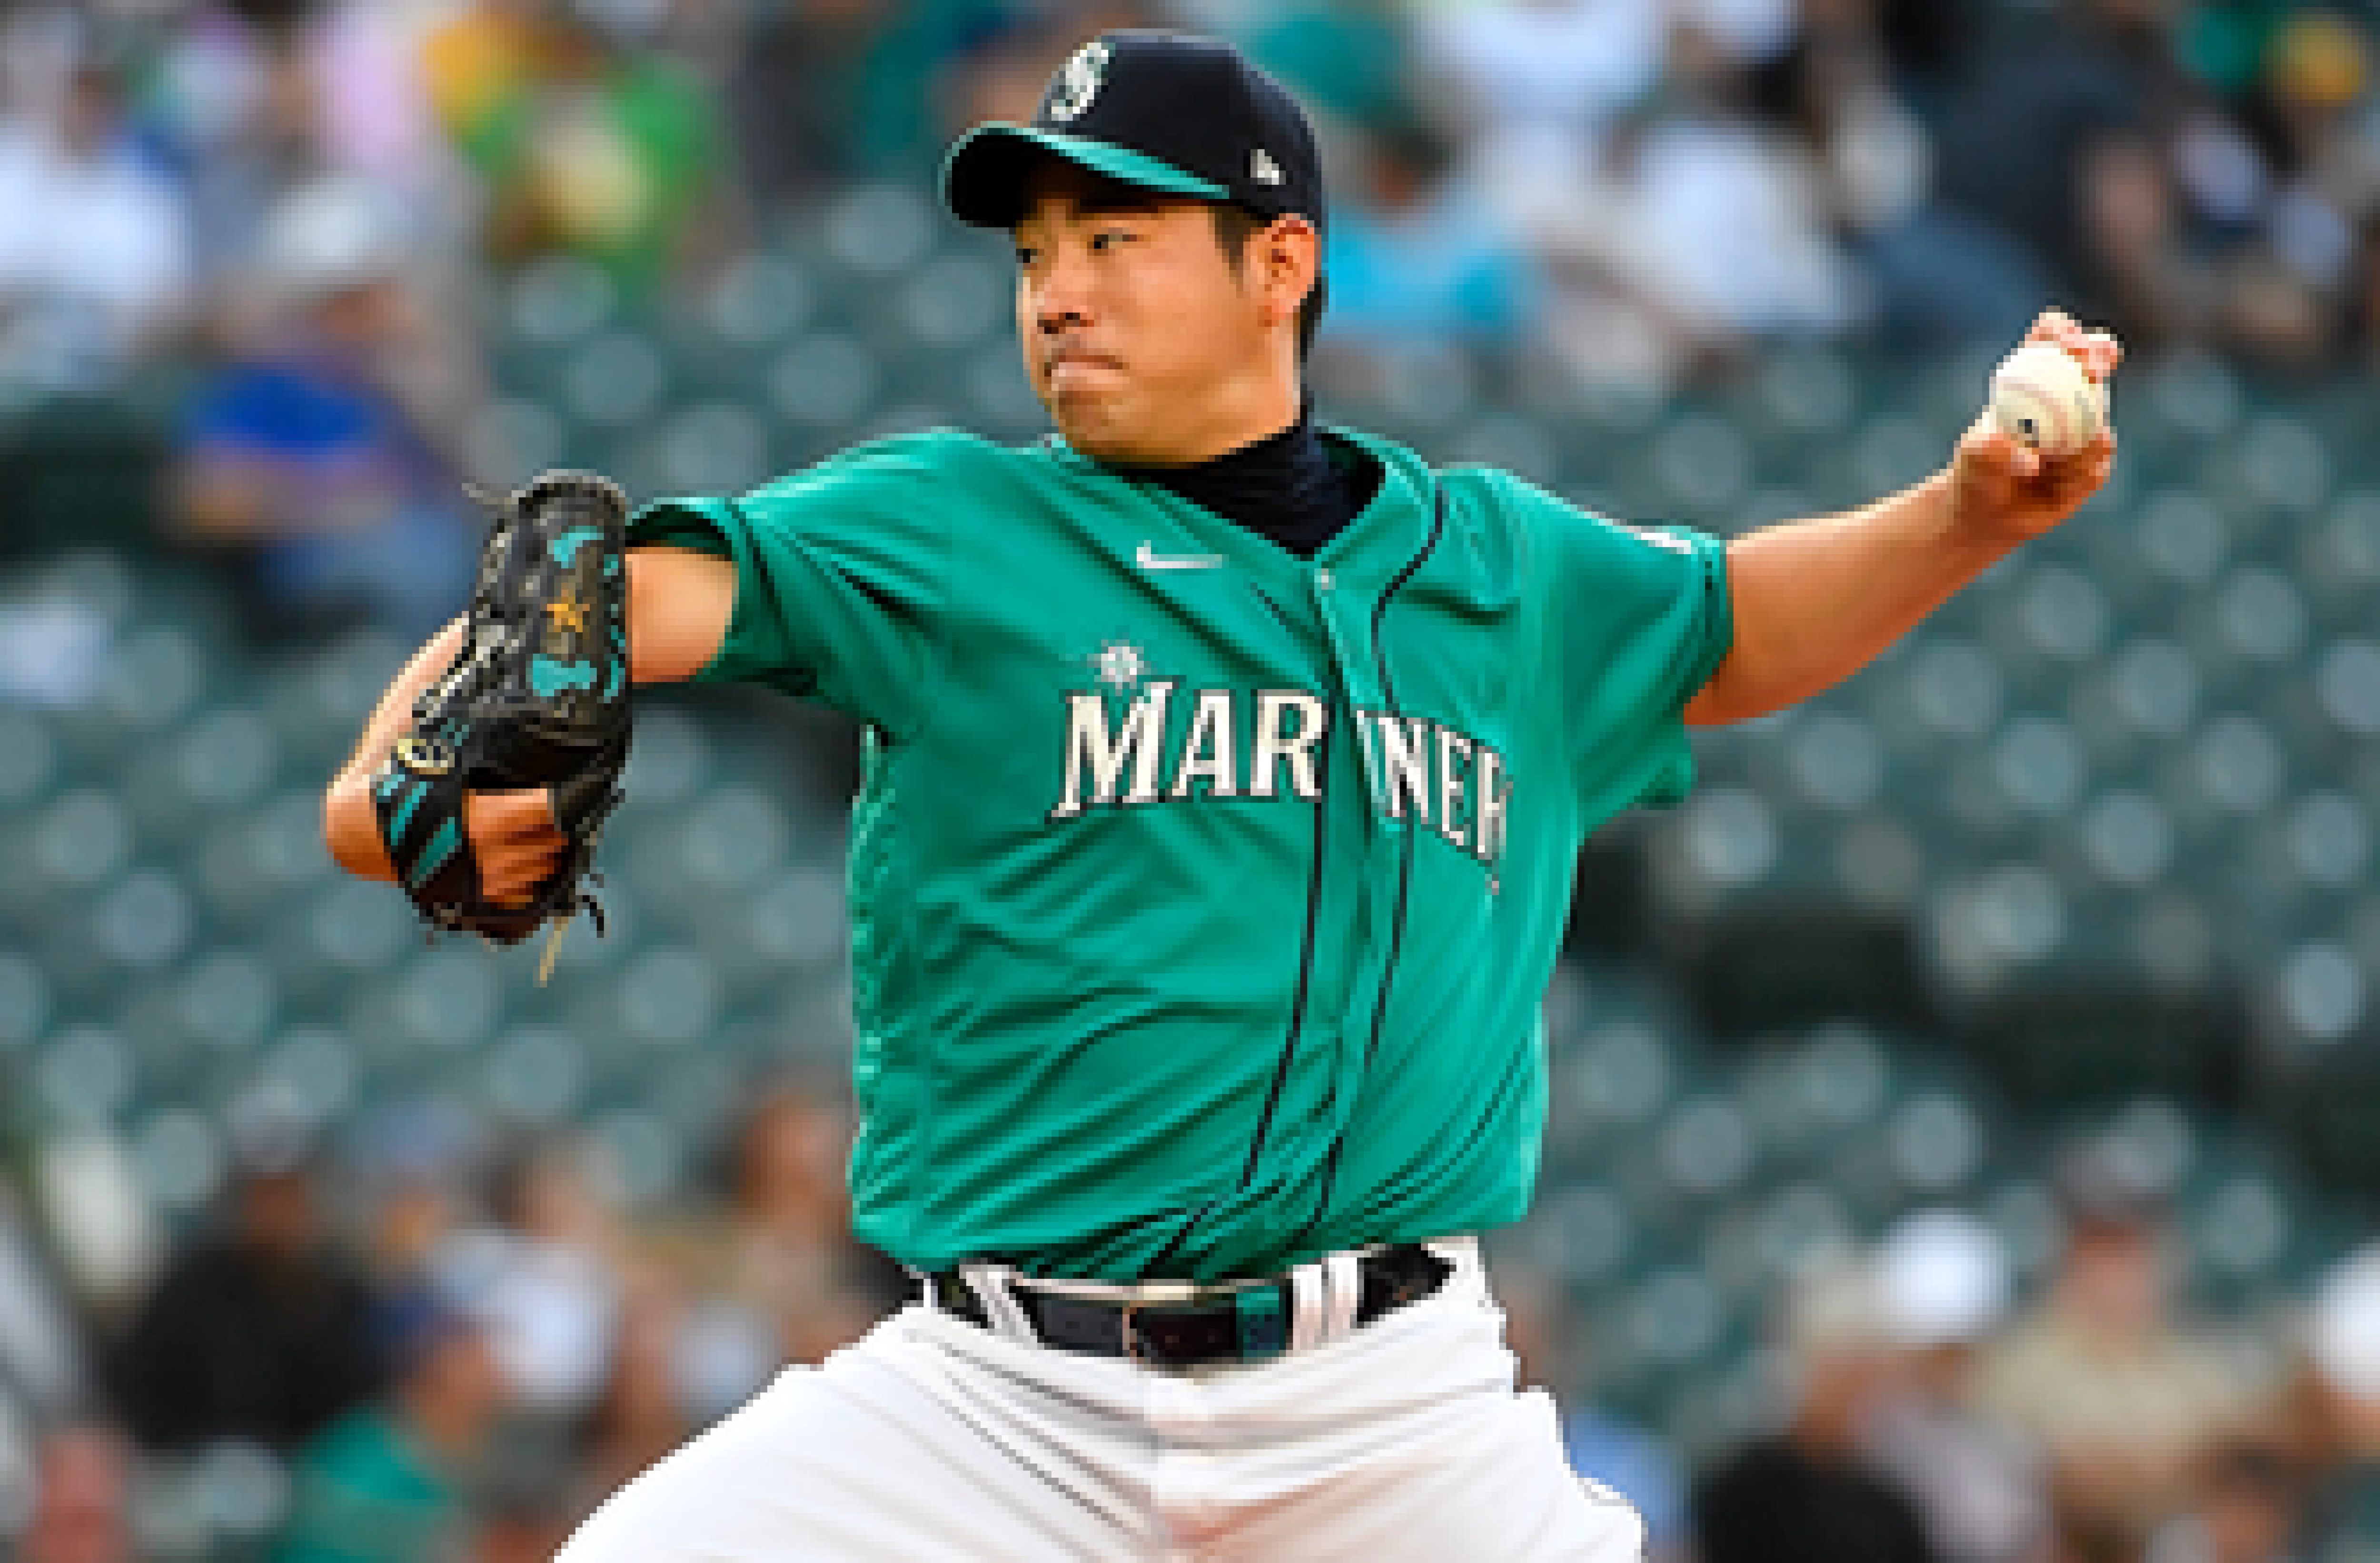 Yusei Kikuchi fans 12, Mariners hold off Athletics, 4-3